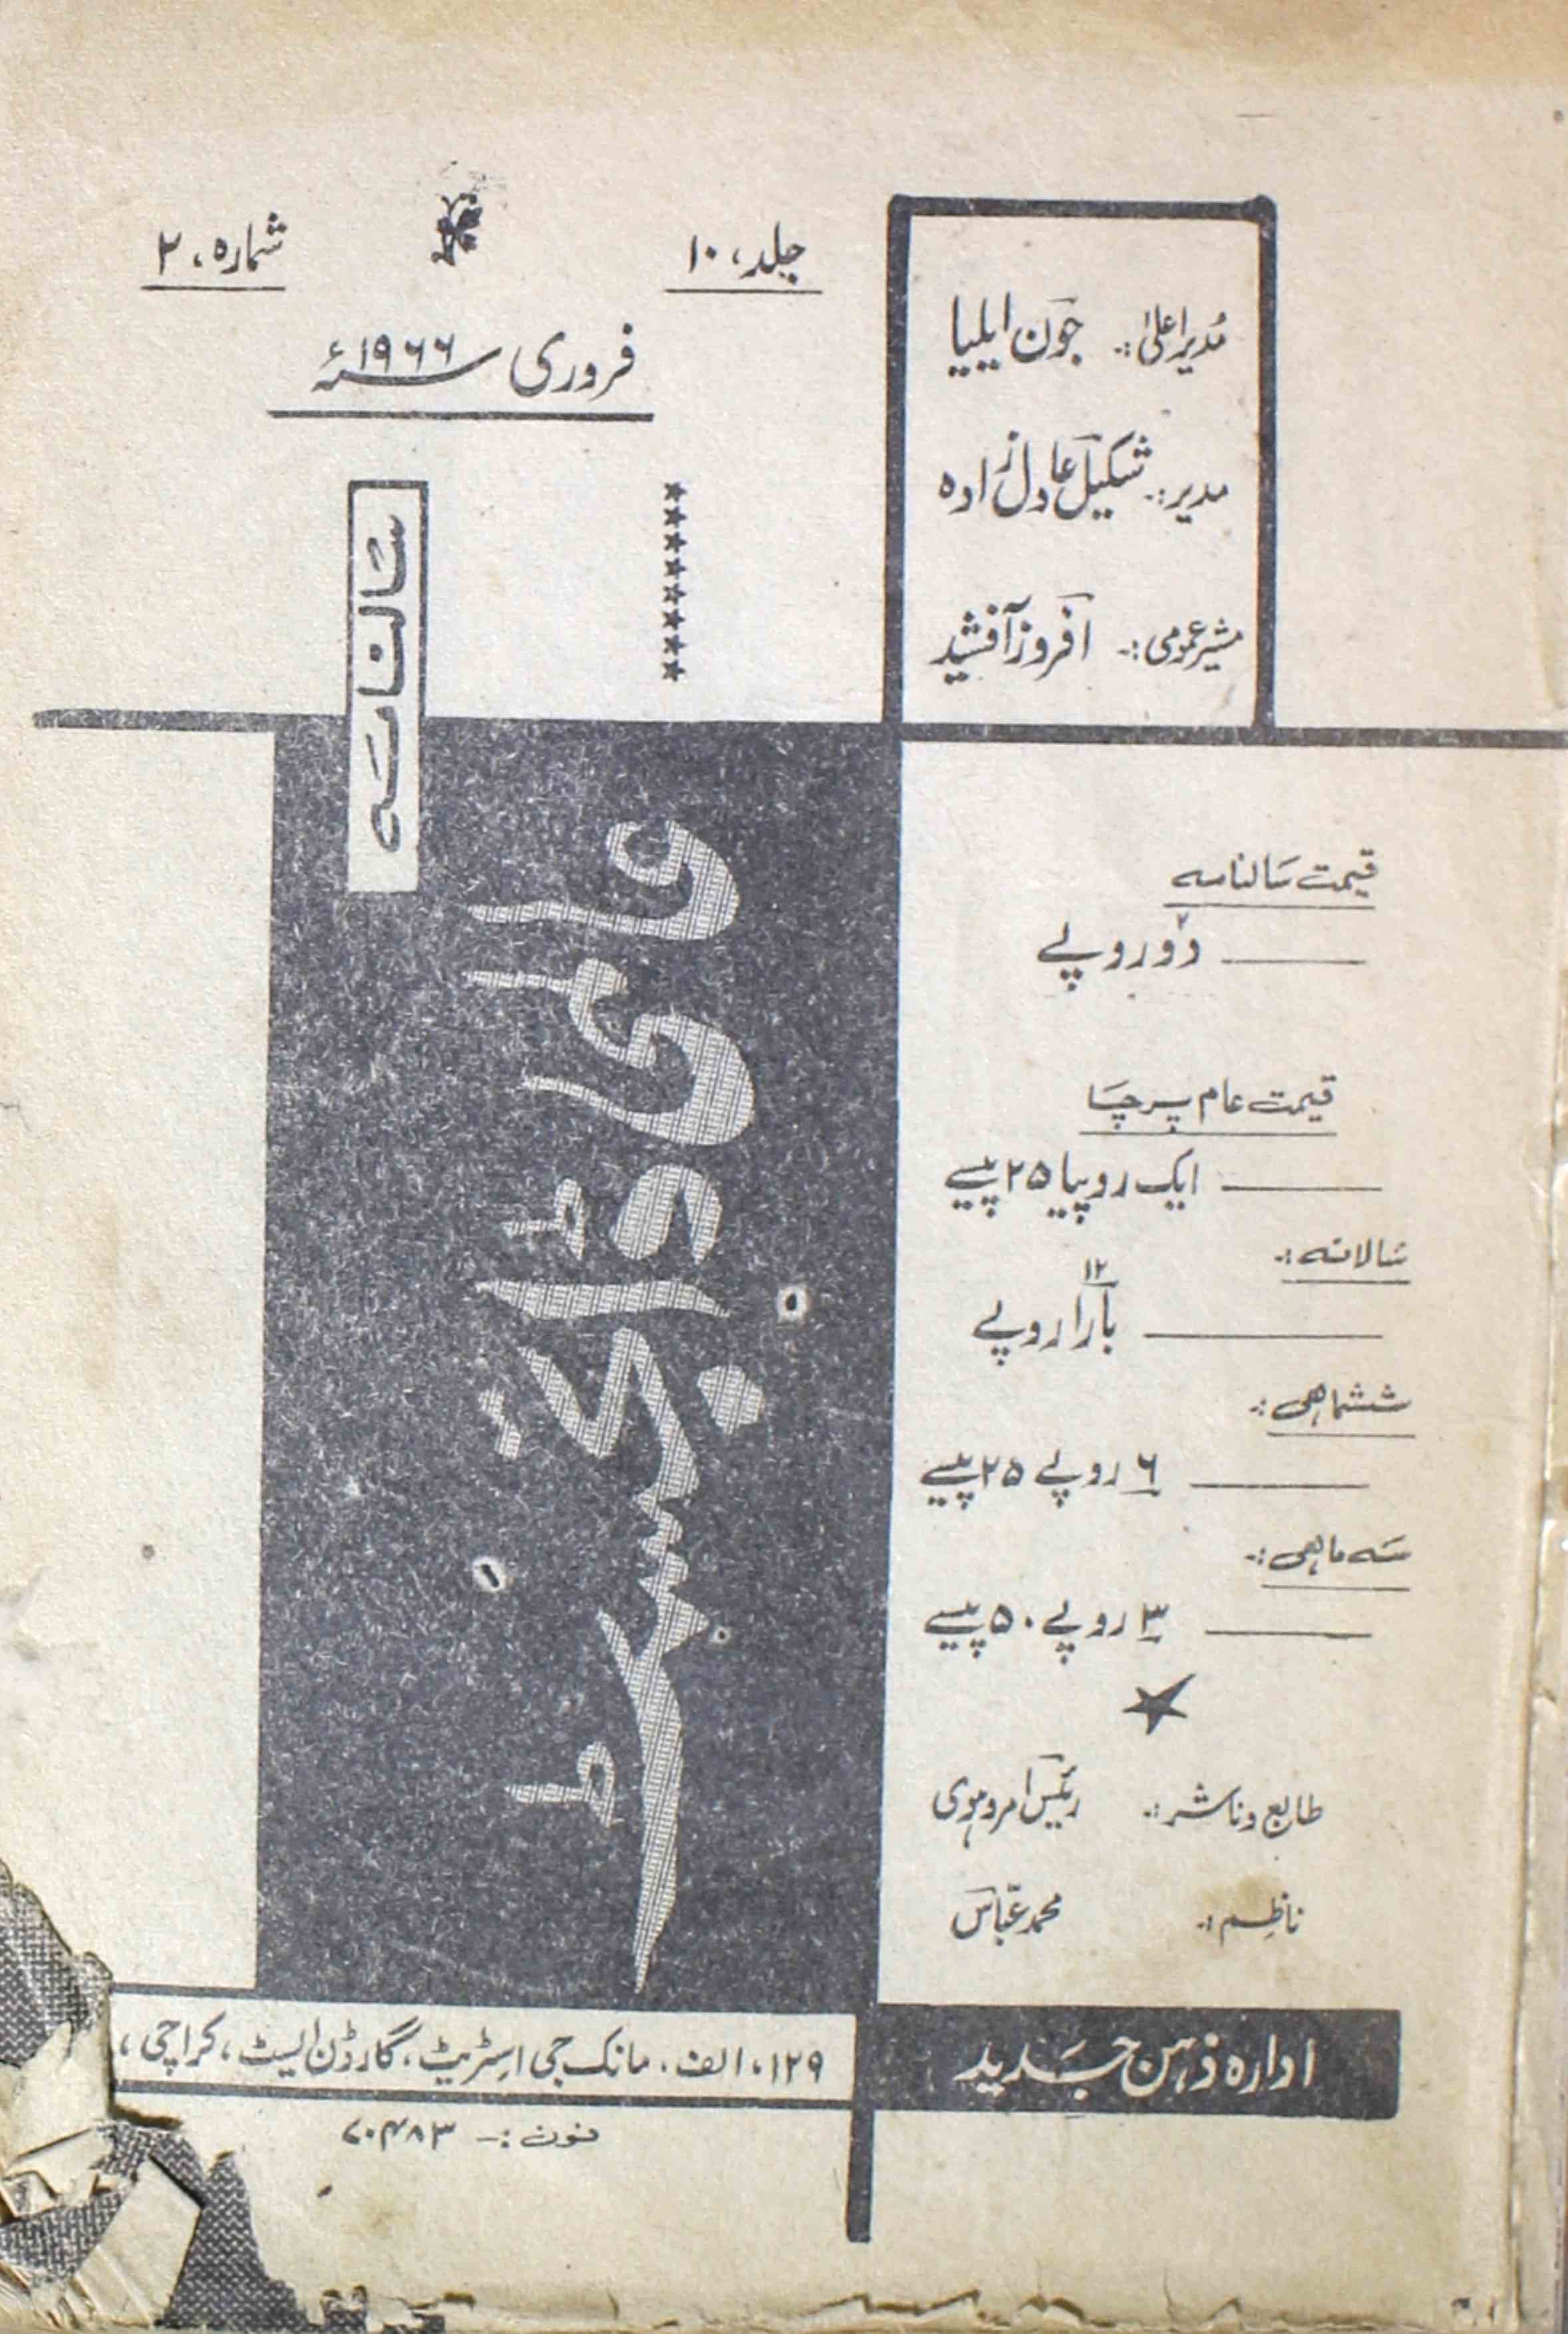 Aalimi Diagest Jild 10 Shumara 2 Feb 1966 SVK